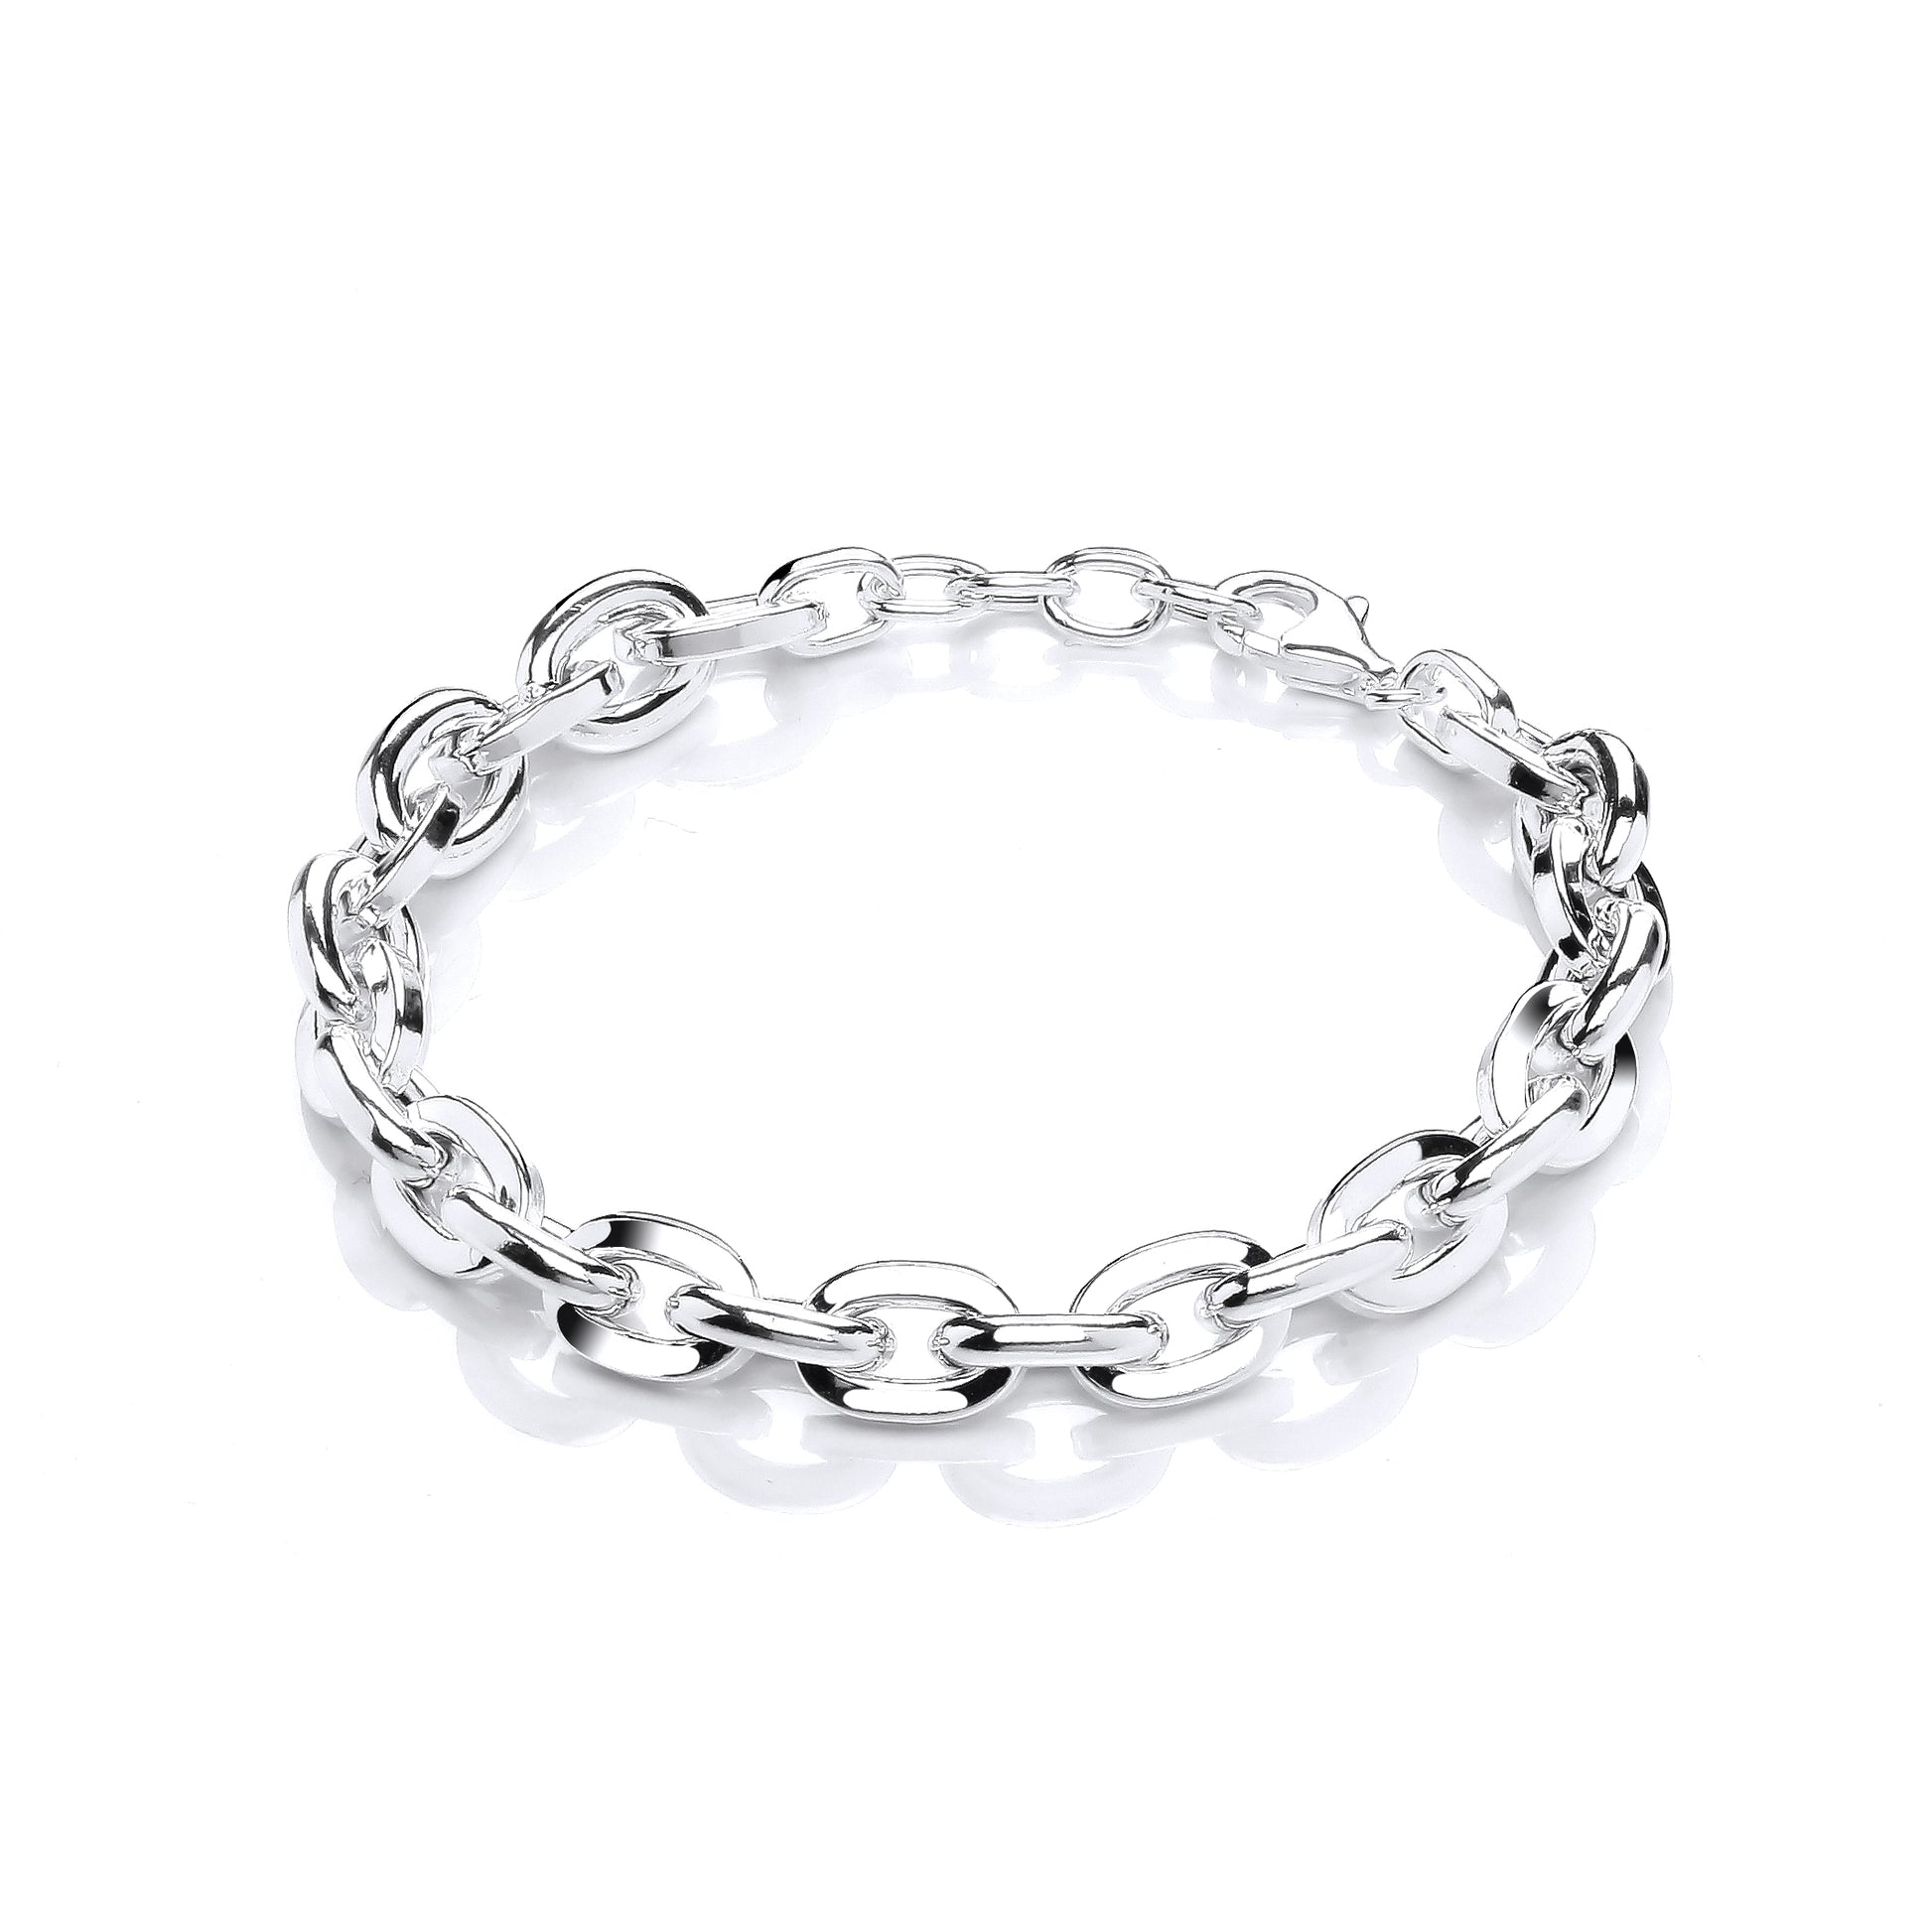 Silver  Alternating Flat & Rounded Oval Links Chain Bracelet - GVB473